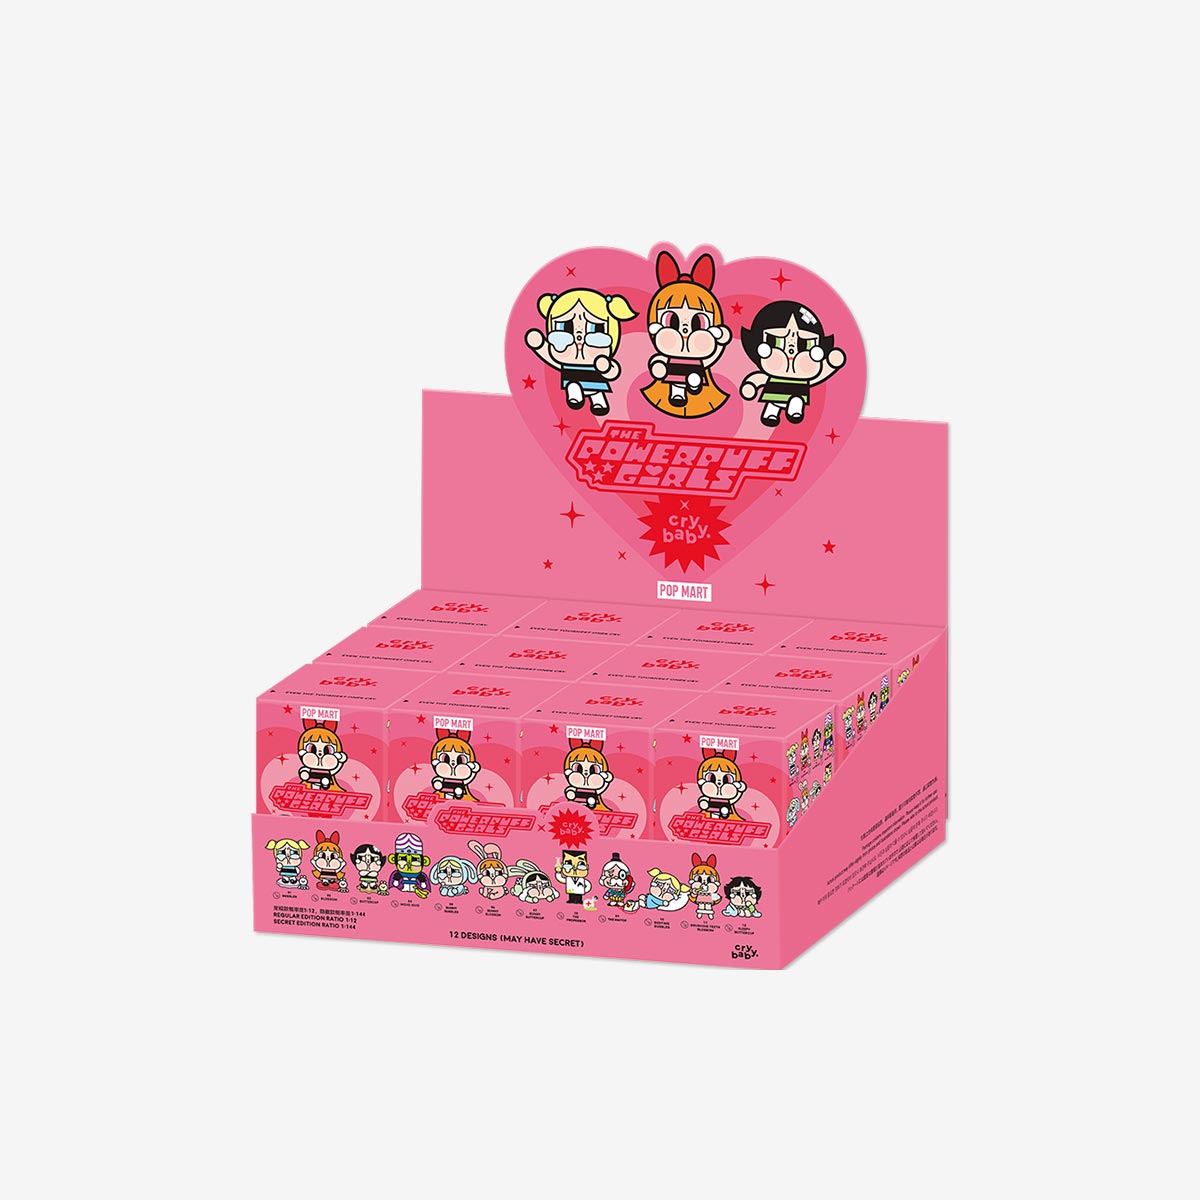 CRYBABY x Powerpuff Girls Series Figures | Blind Boxes - POP MART 